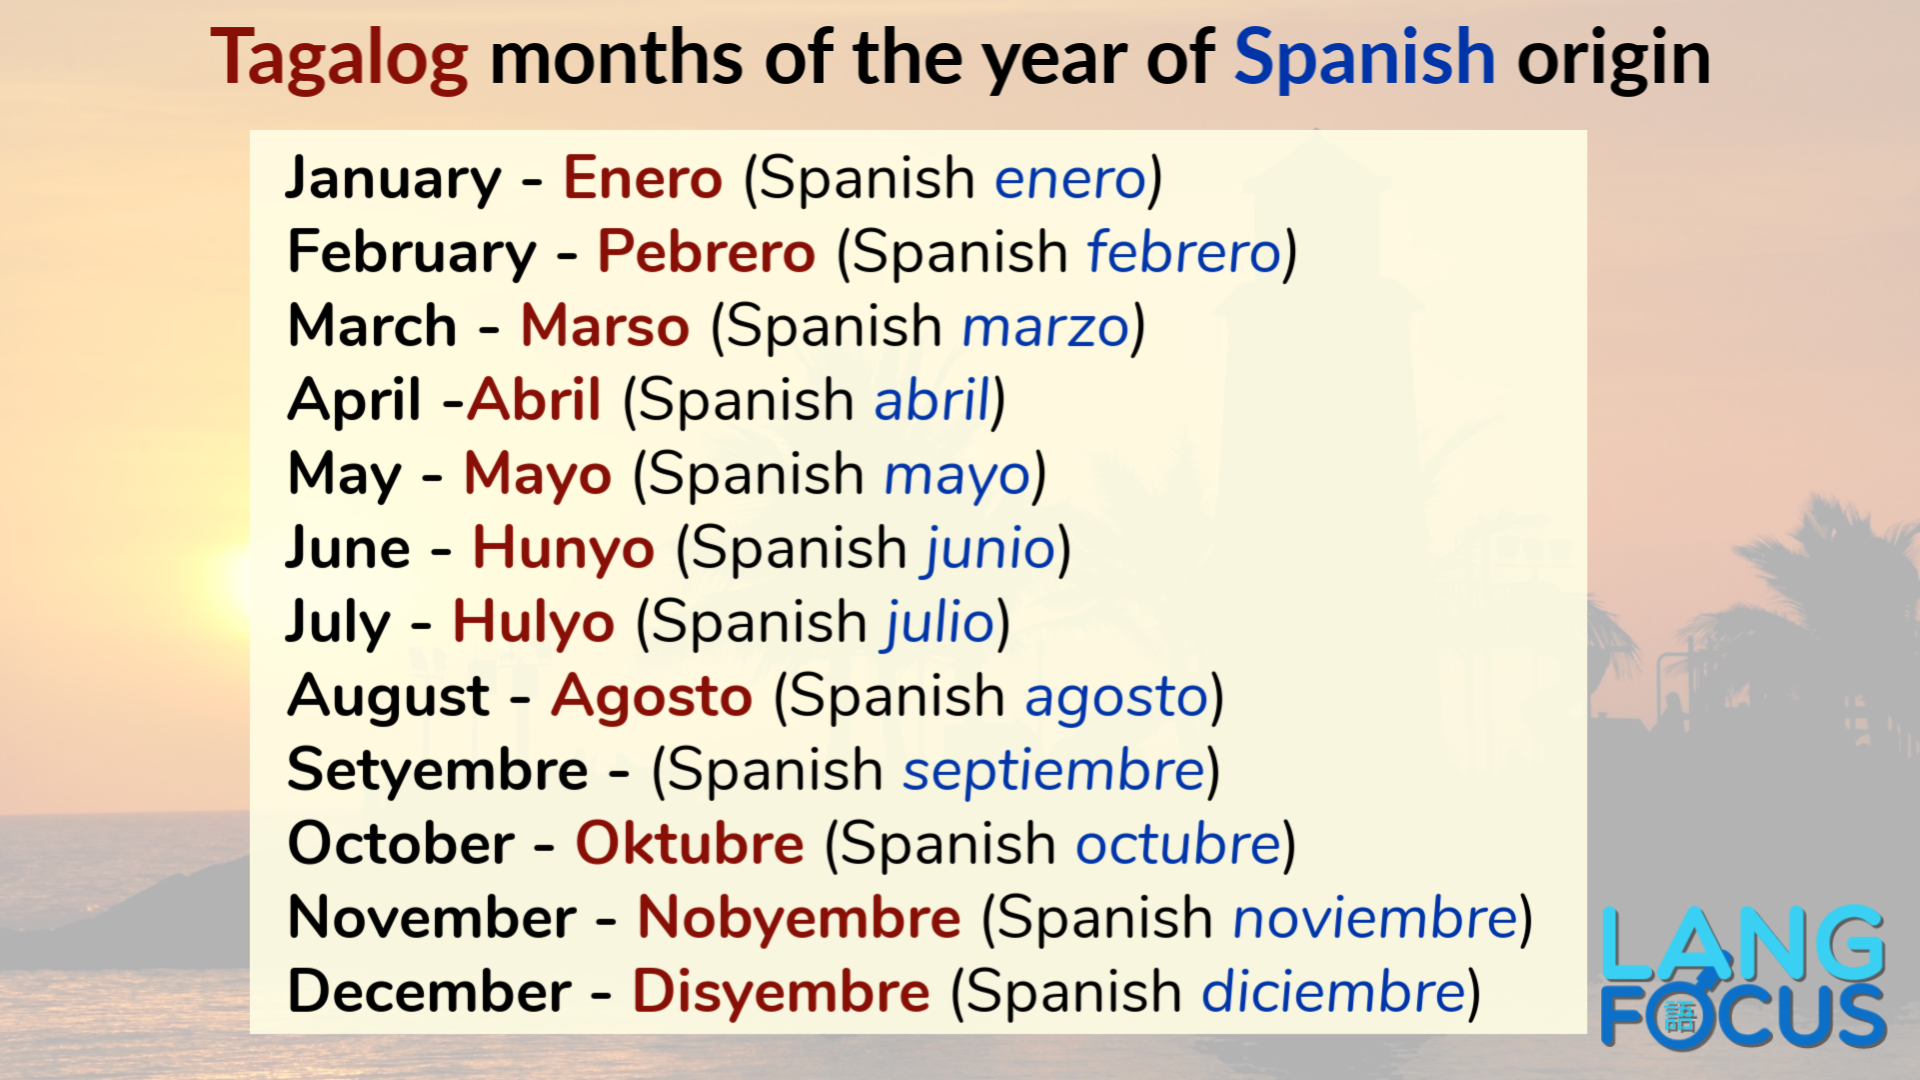 Spanish Vocabulary in Tagalog (Filipino)